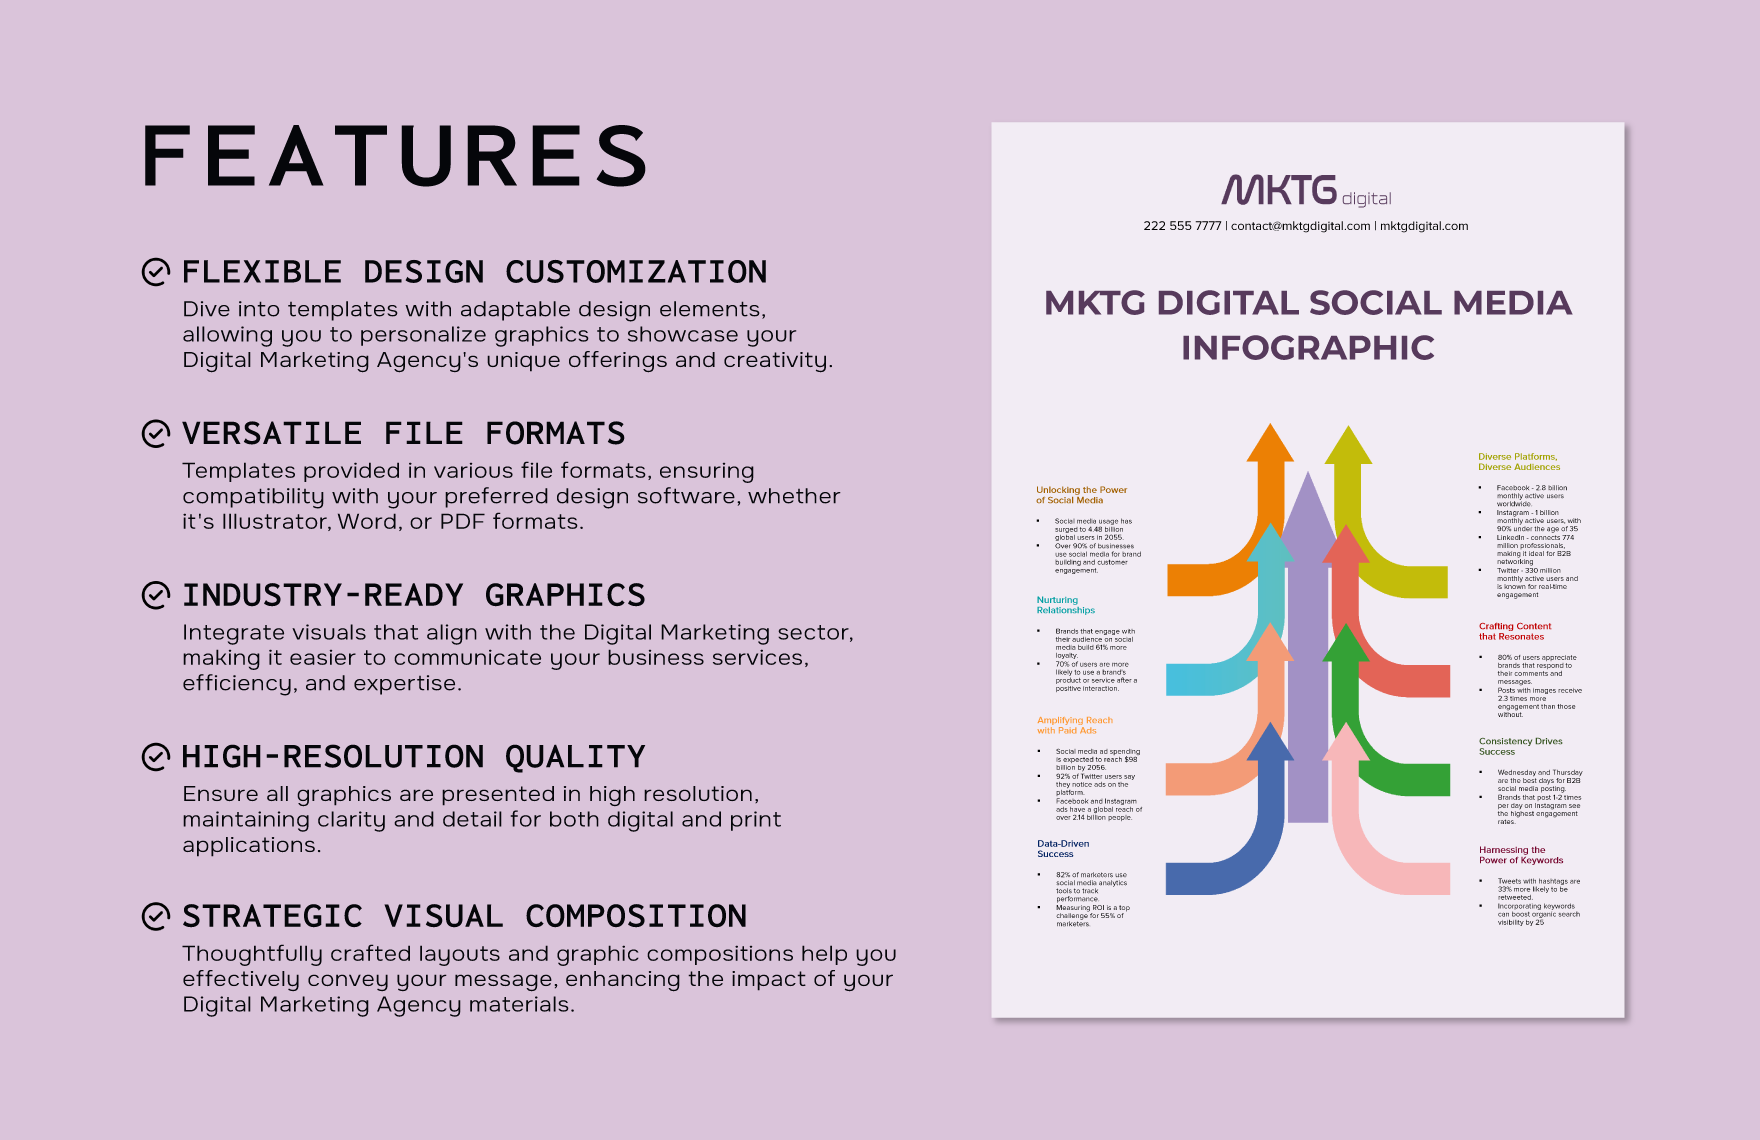 Digital Marketing Agency Social Media Infographic Template